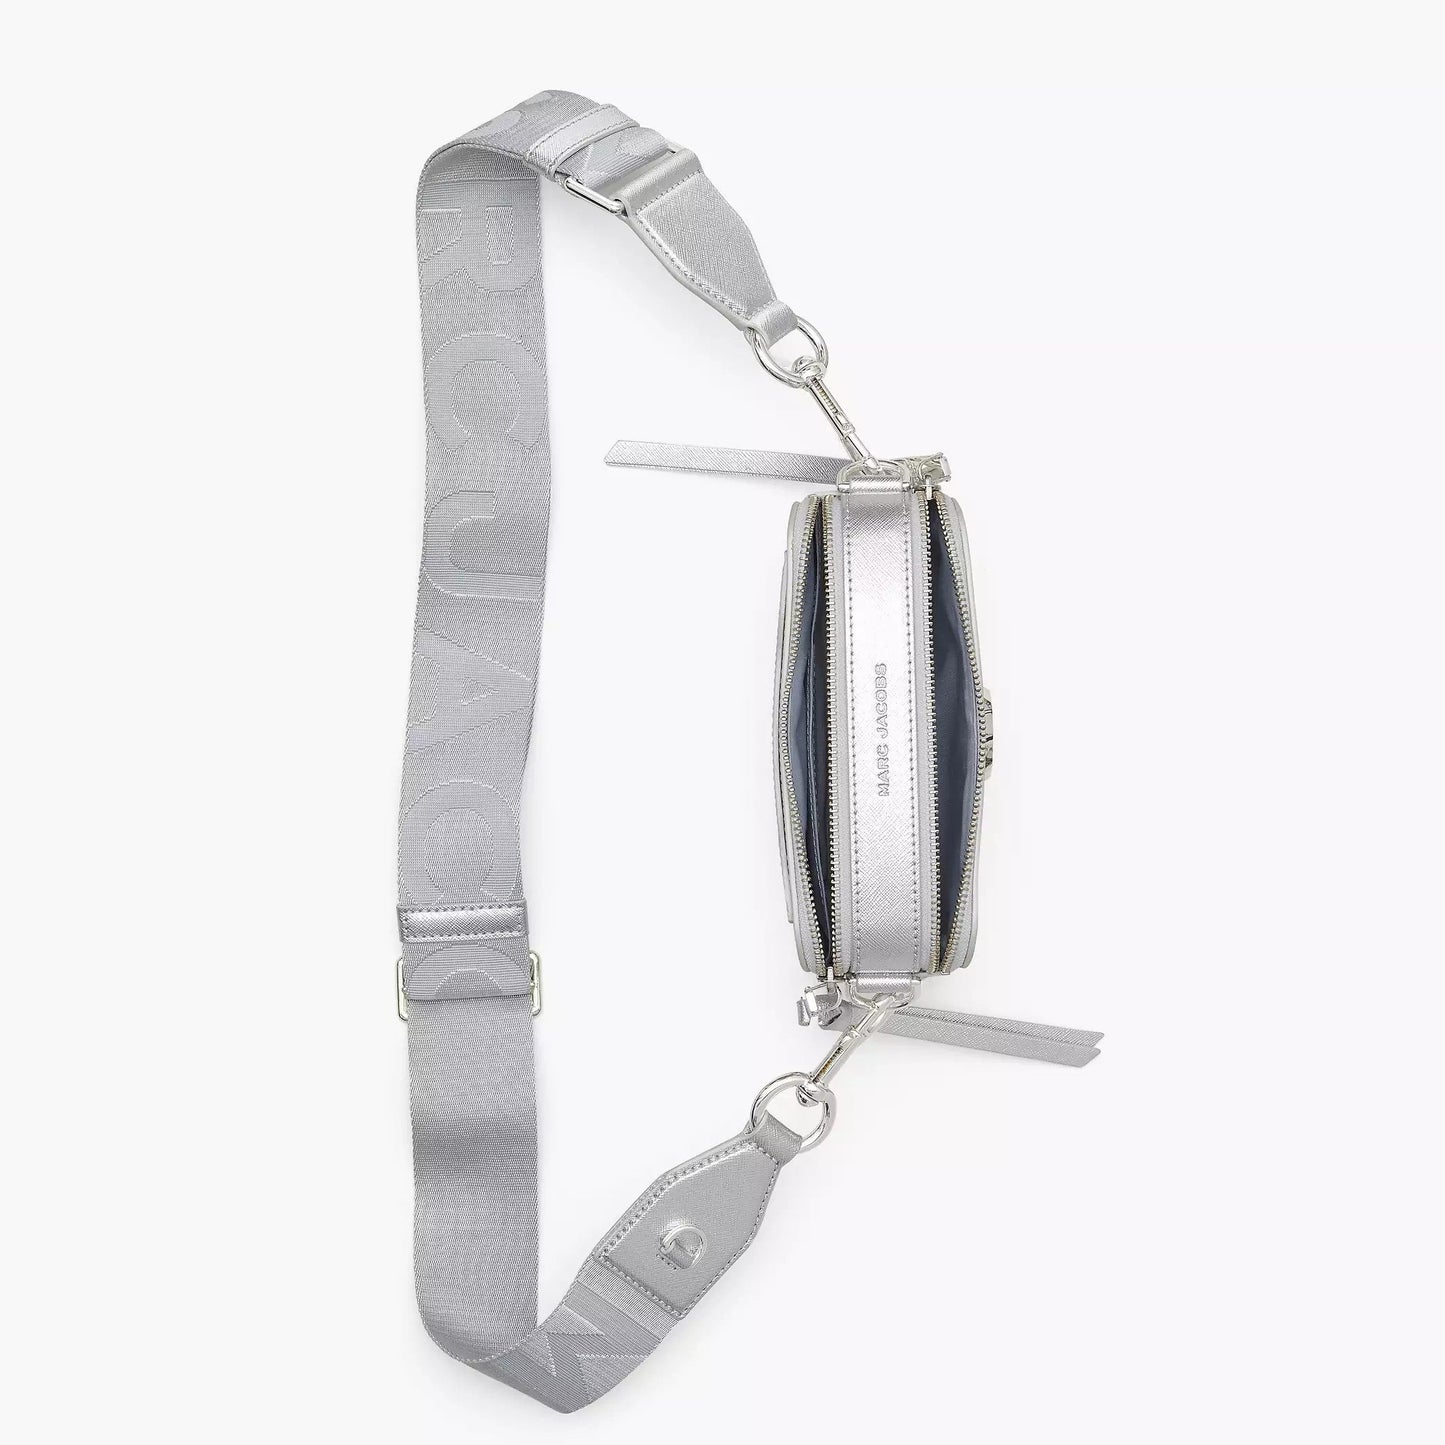 The Metallic Snapshot DTM Camera Bag in Silver Handbags MARC JACOBS - LOLAMIR